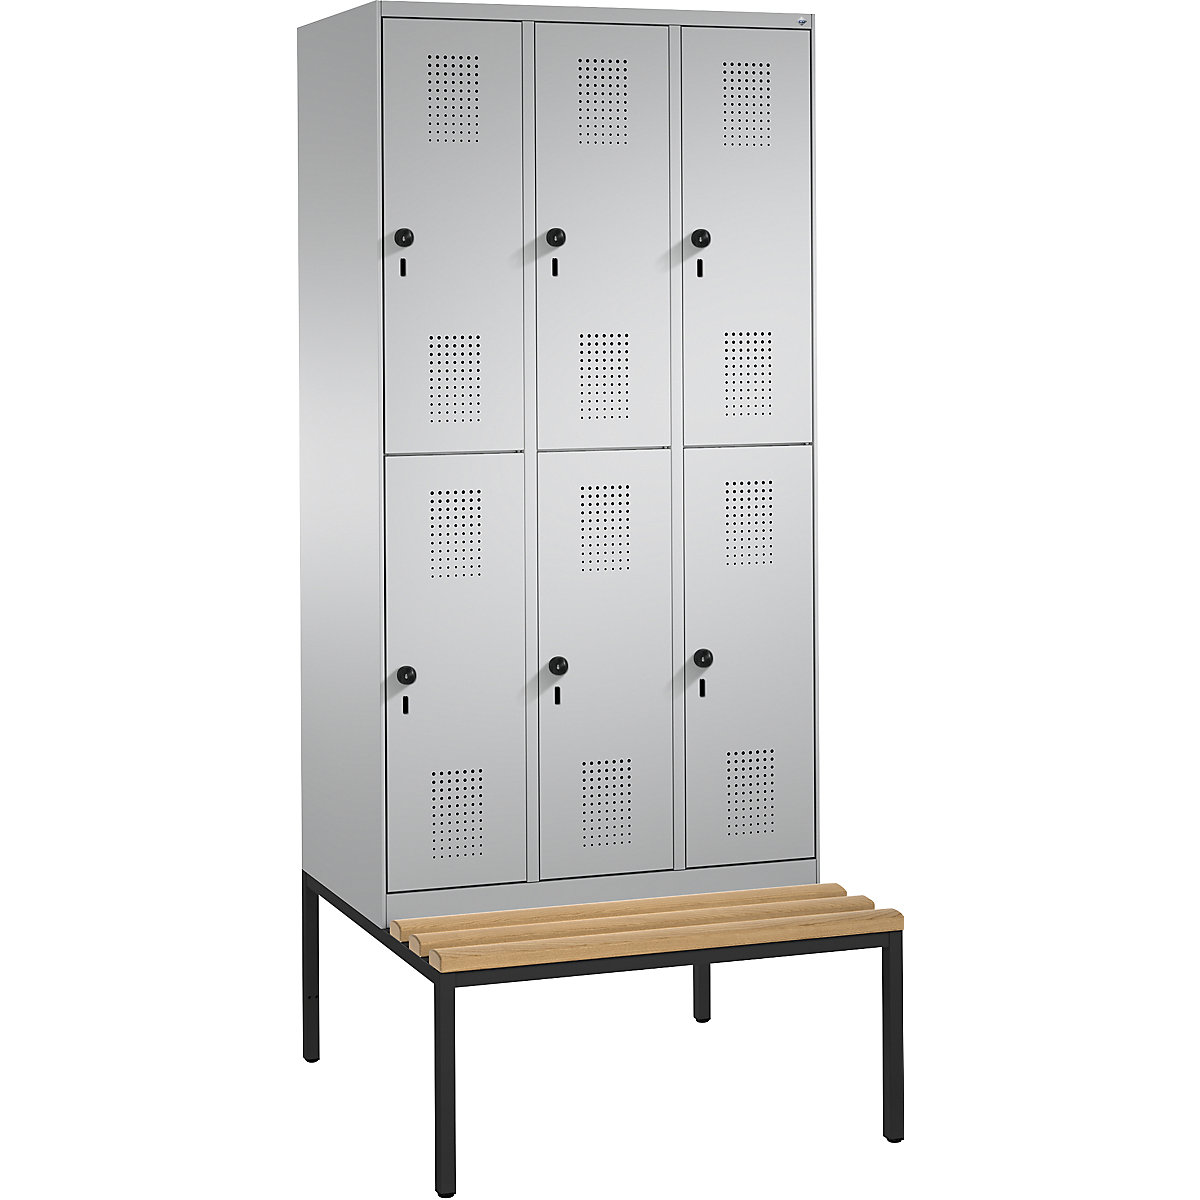 EVOLO cloakroom locker, double tier, with bench – C+P, 3 compartments, 2 shelf compartments each, compartment width 300 mm, white aluminium / white aluminium-4